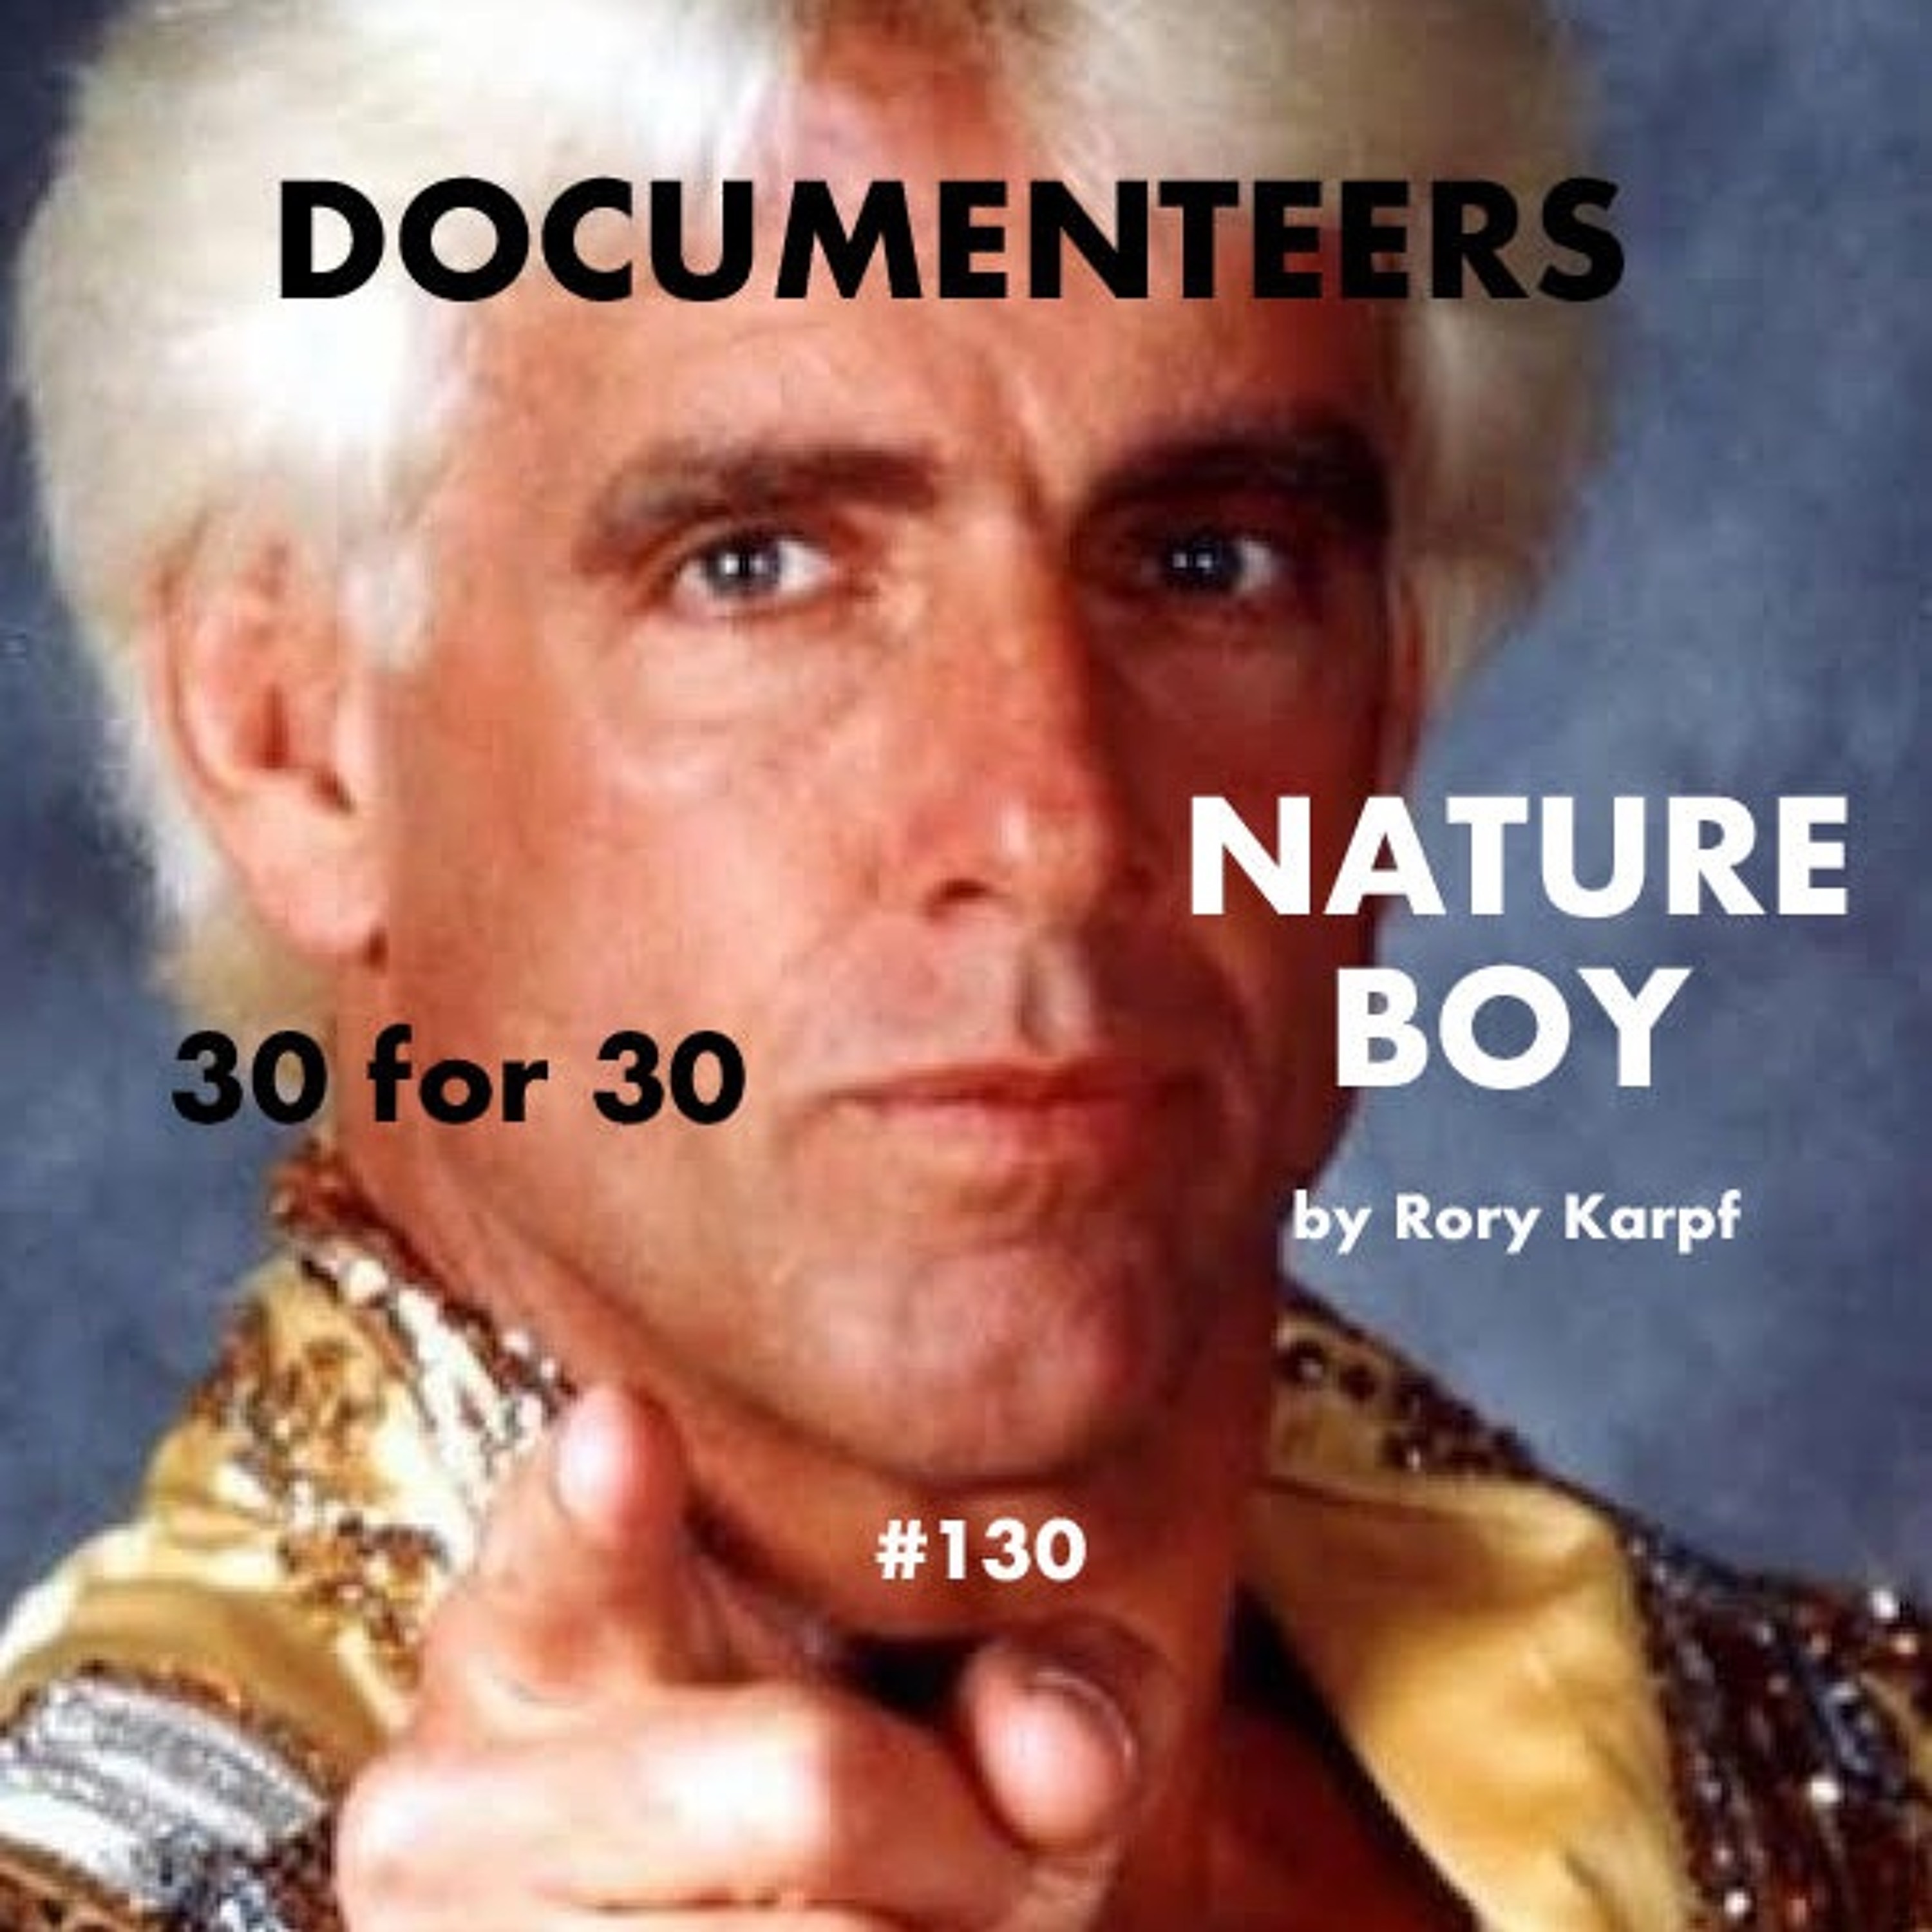 tuberkulose Utallige sponsoreret Episode 131 - 30 for 30: Nature Boy – Documenteers: The Documentary Podcast  – Podcast – Podtail